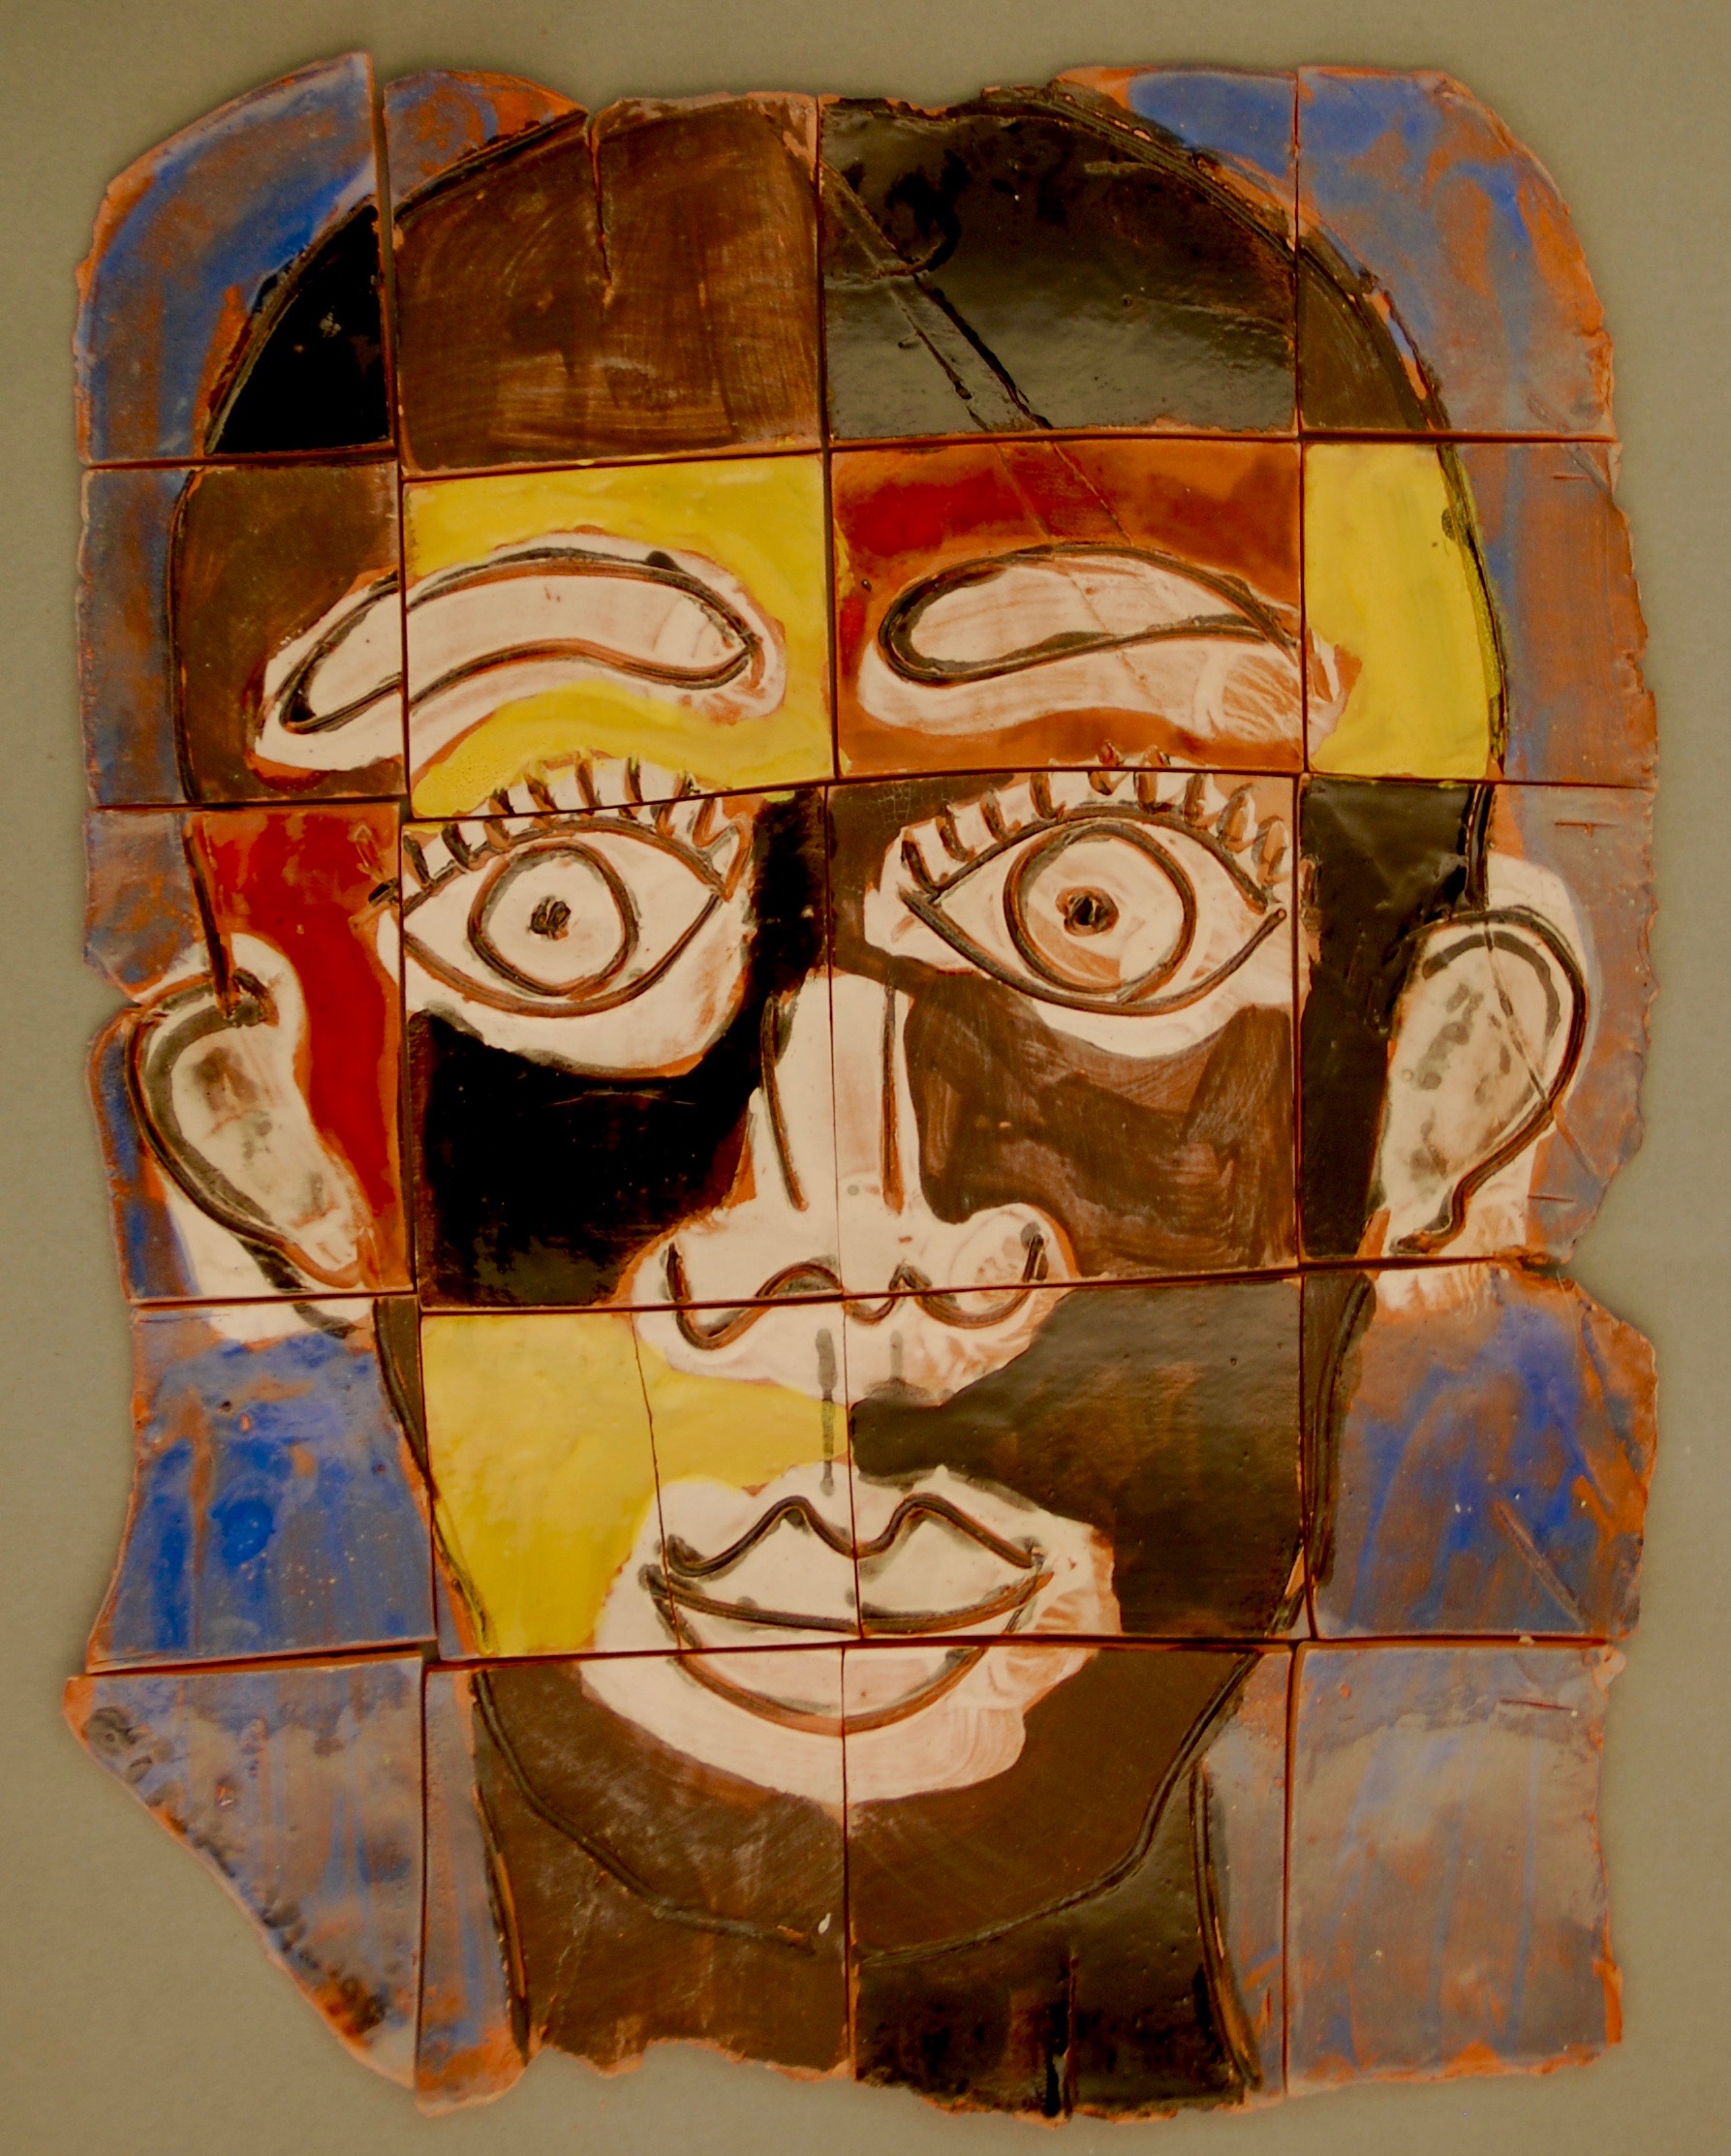 Head of a man terra cotta puzzle, 1999